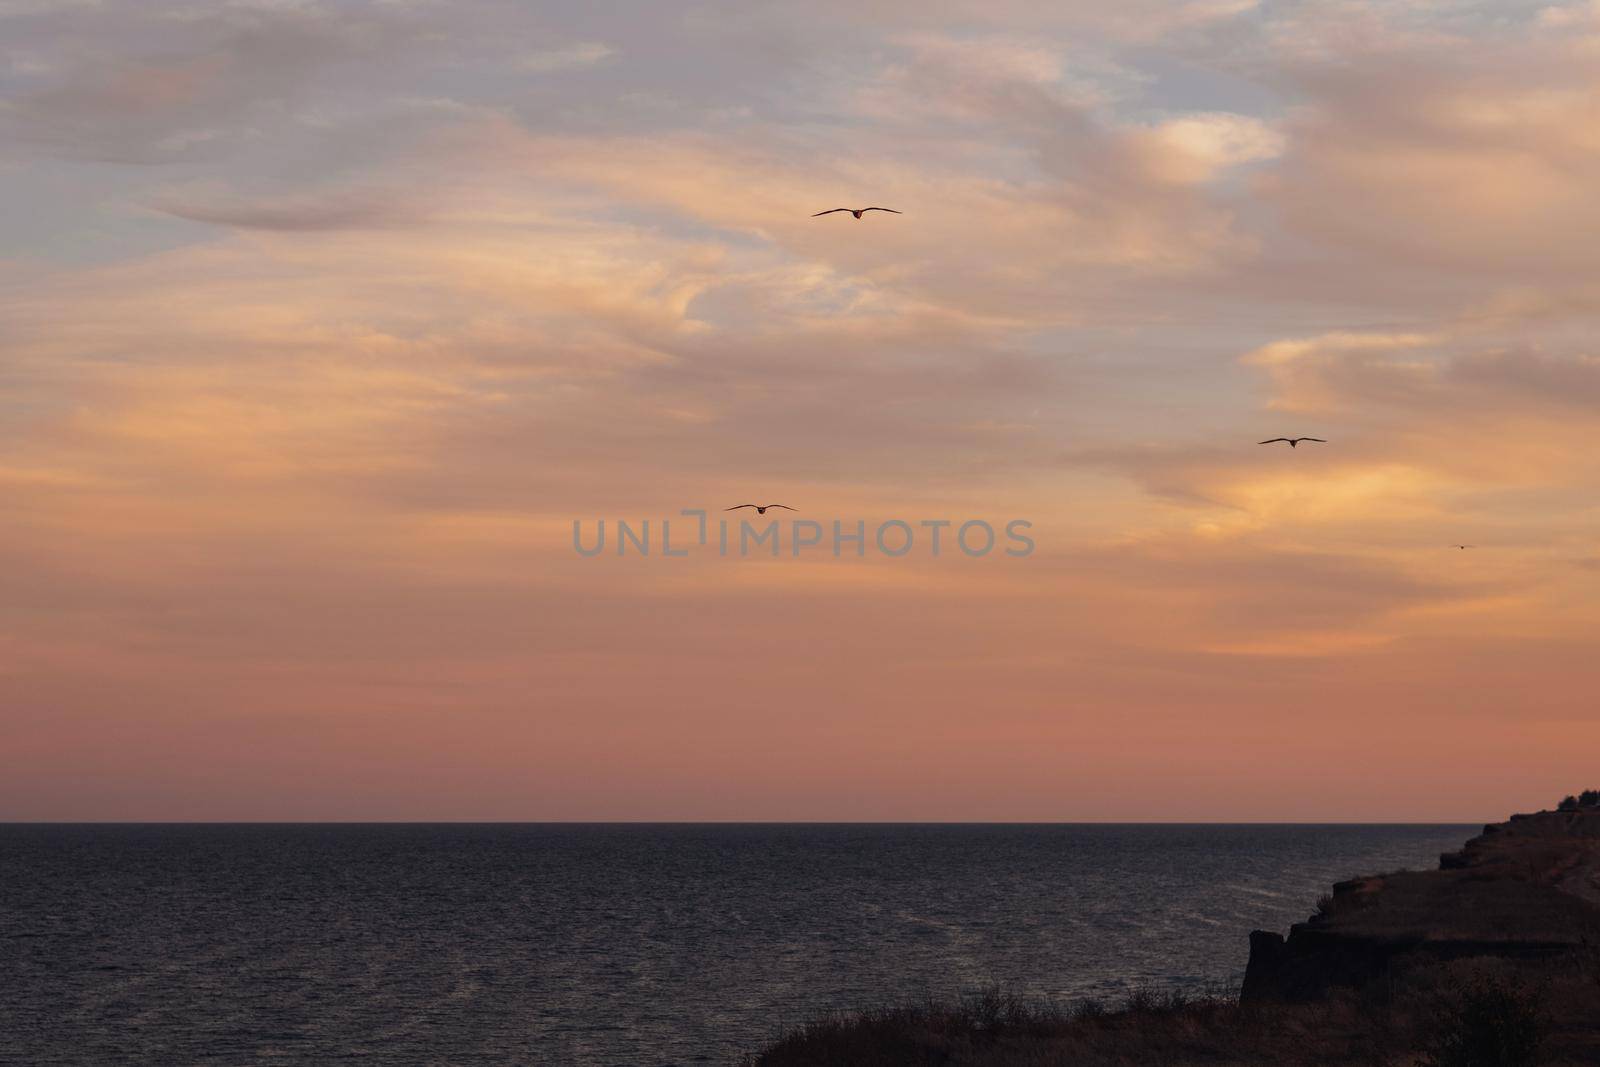 Evening Landscape After Sunset, Seagulls Flying Over Sea on Horizon